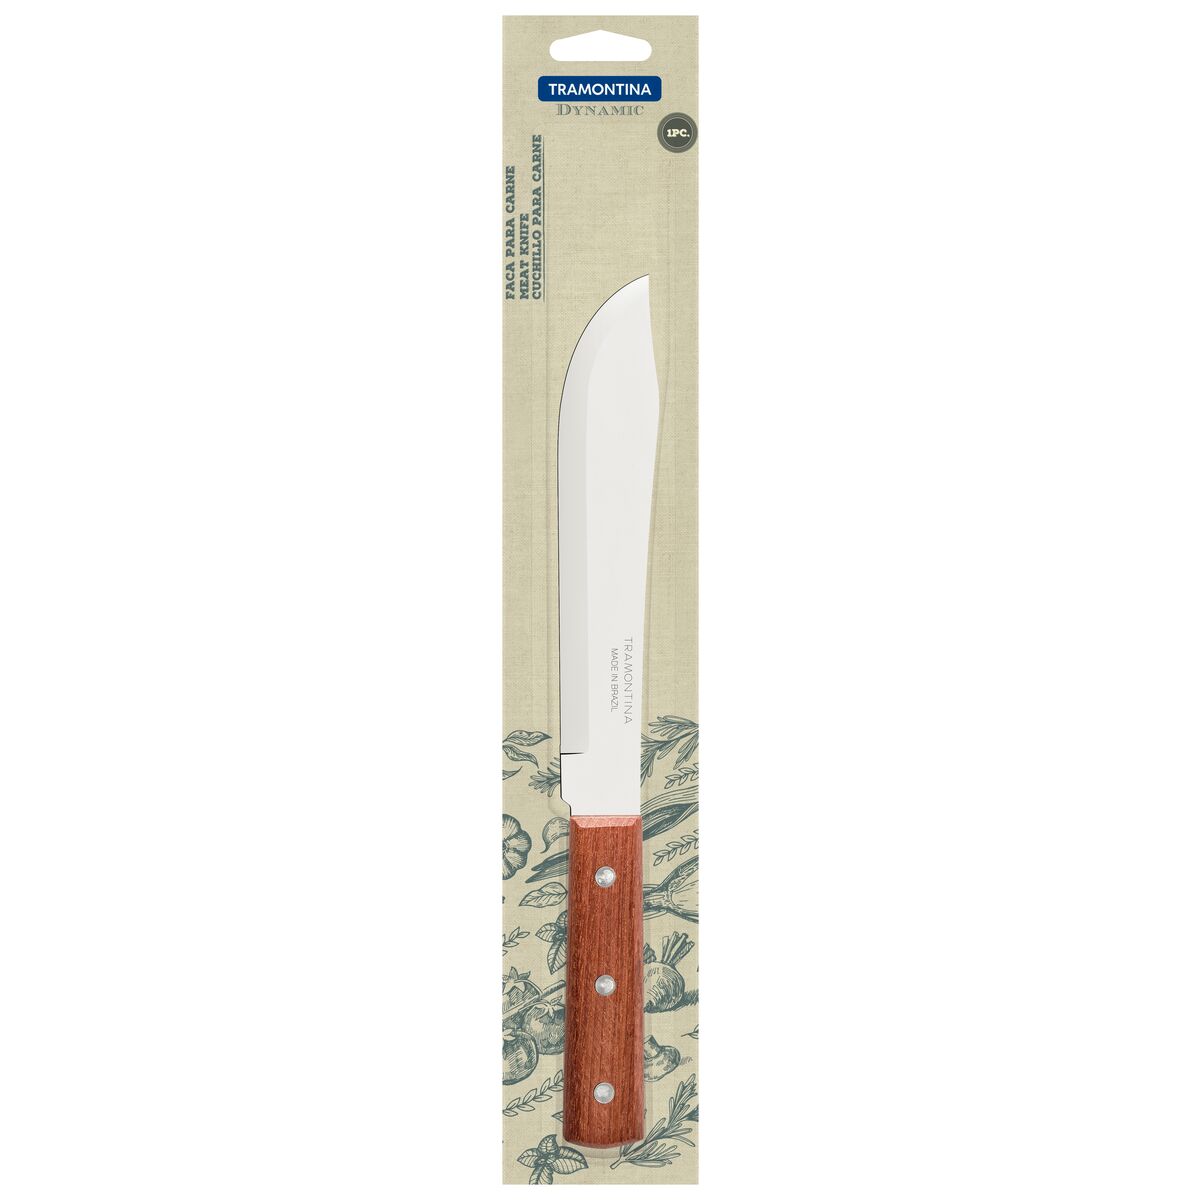 Tramontina Butcher Knife 7" Dynamic - 22901/107